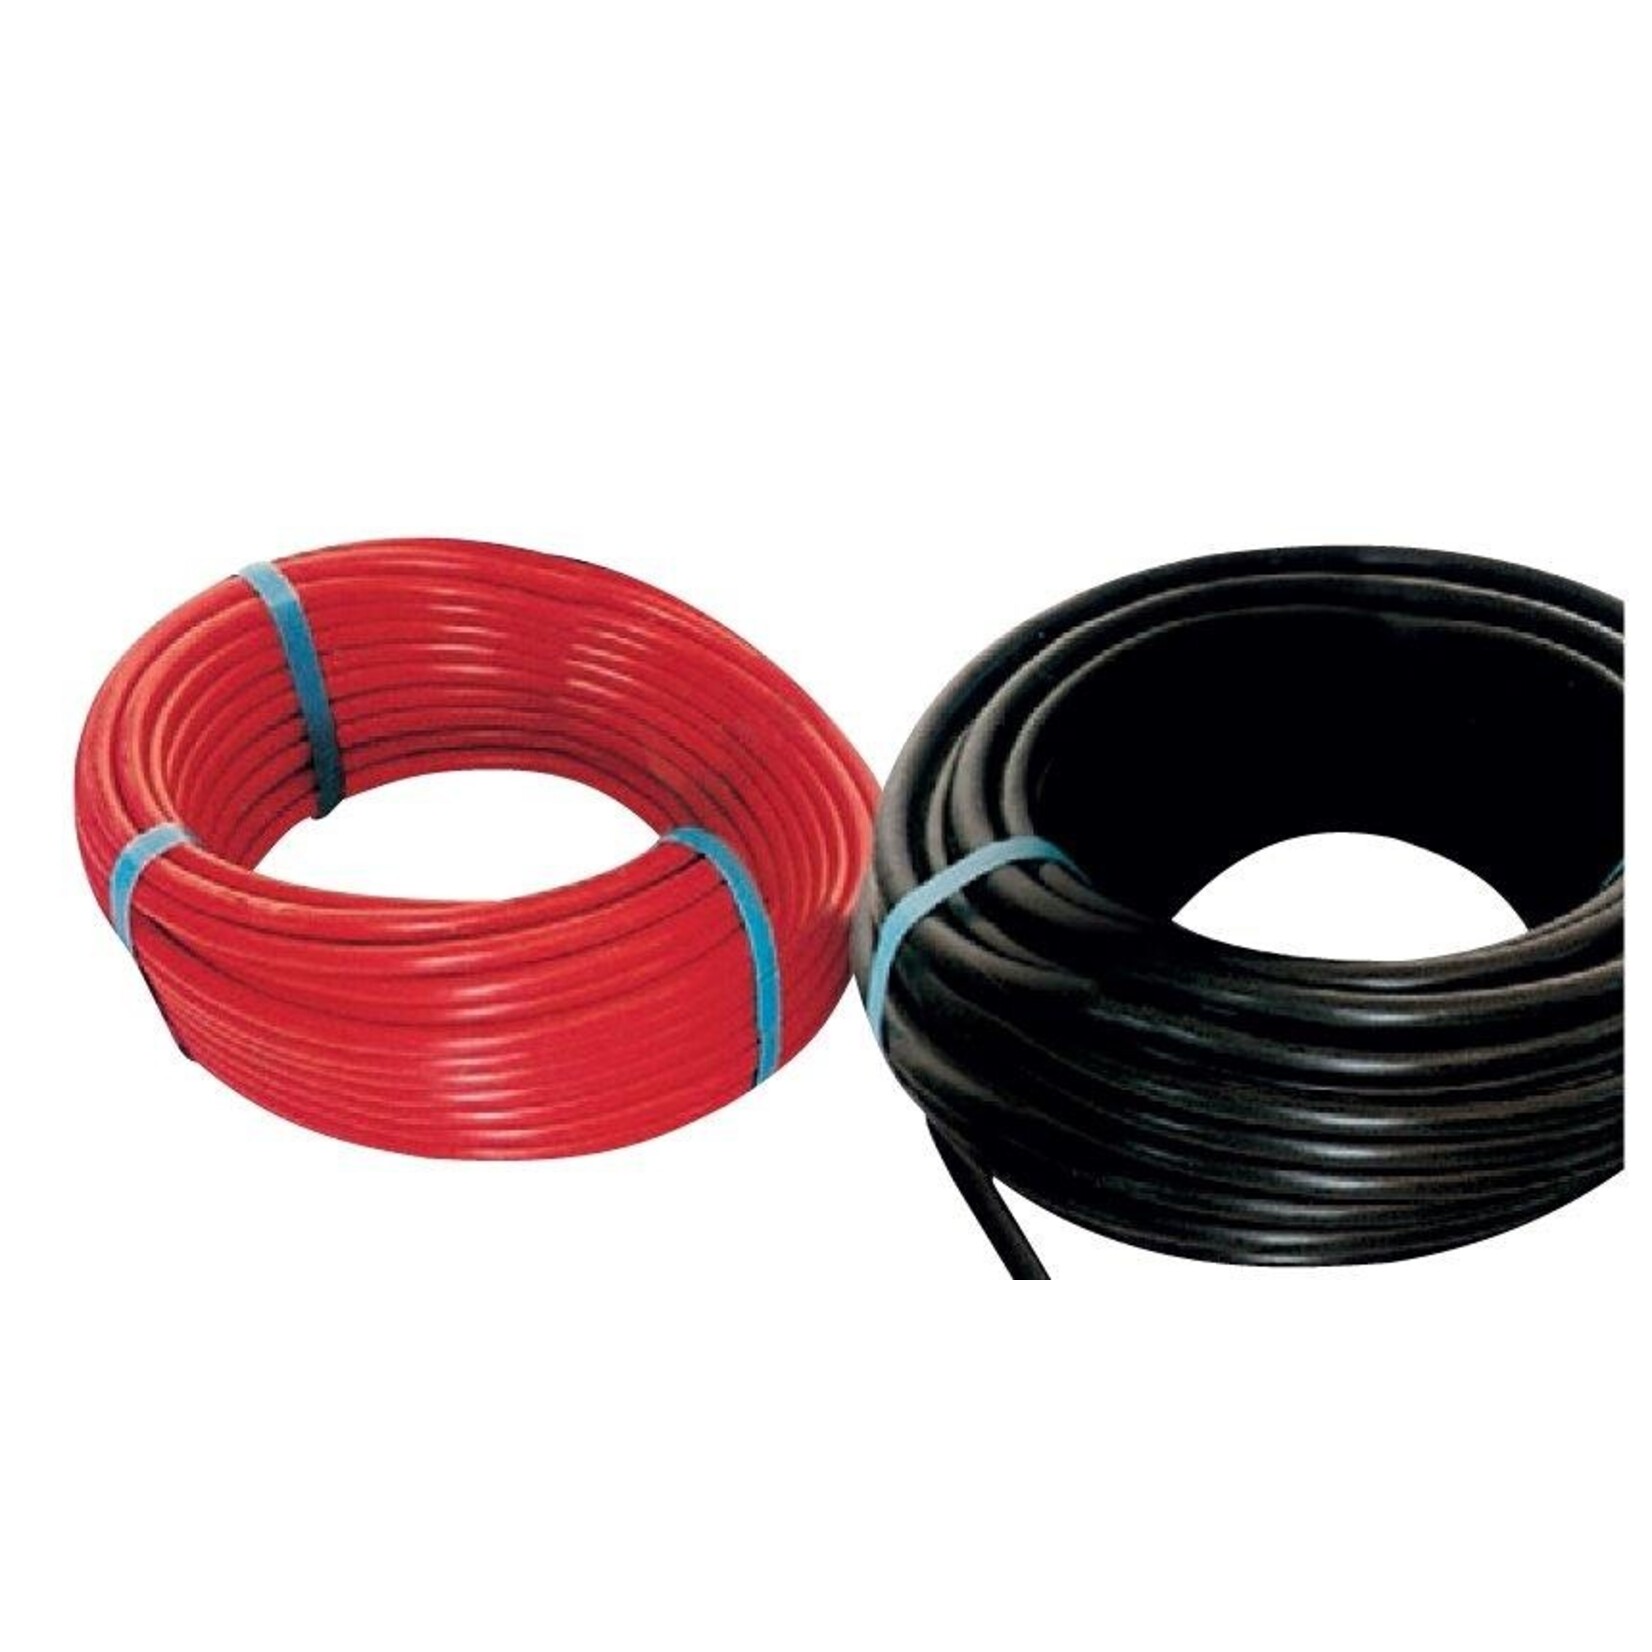 Plastimo Cable 16mm2 black 24tth 25m